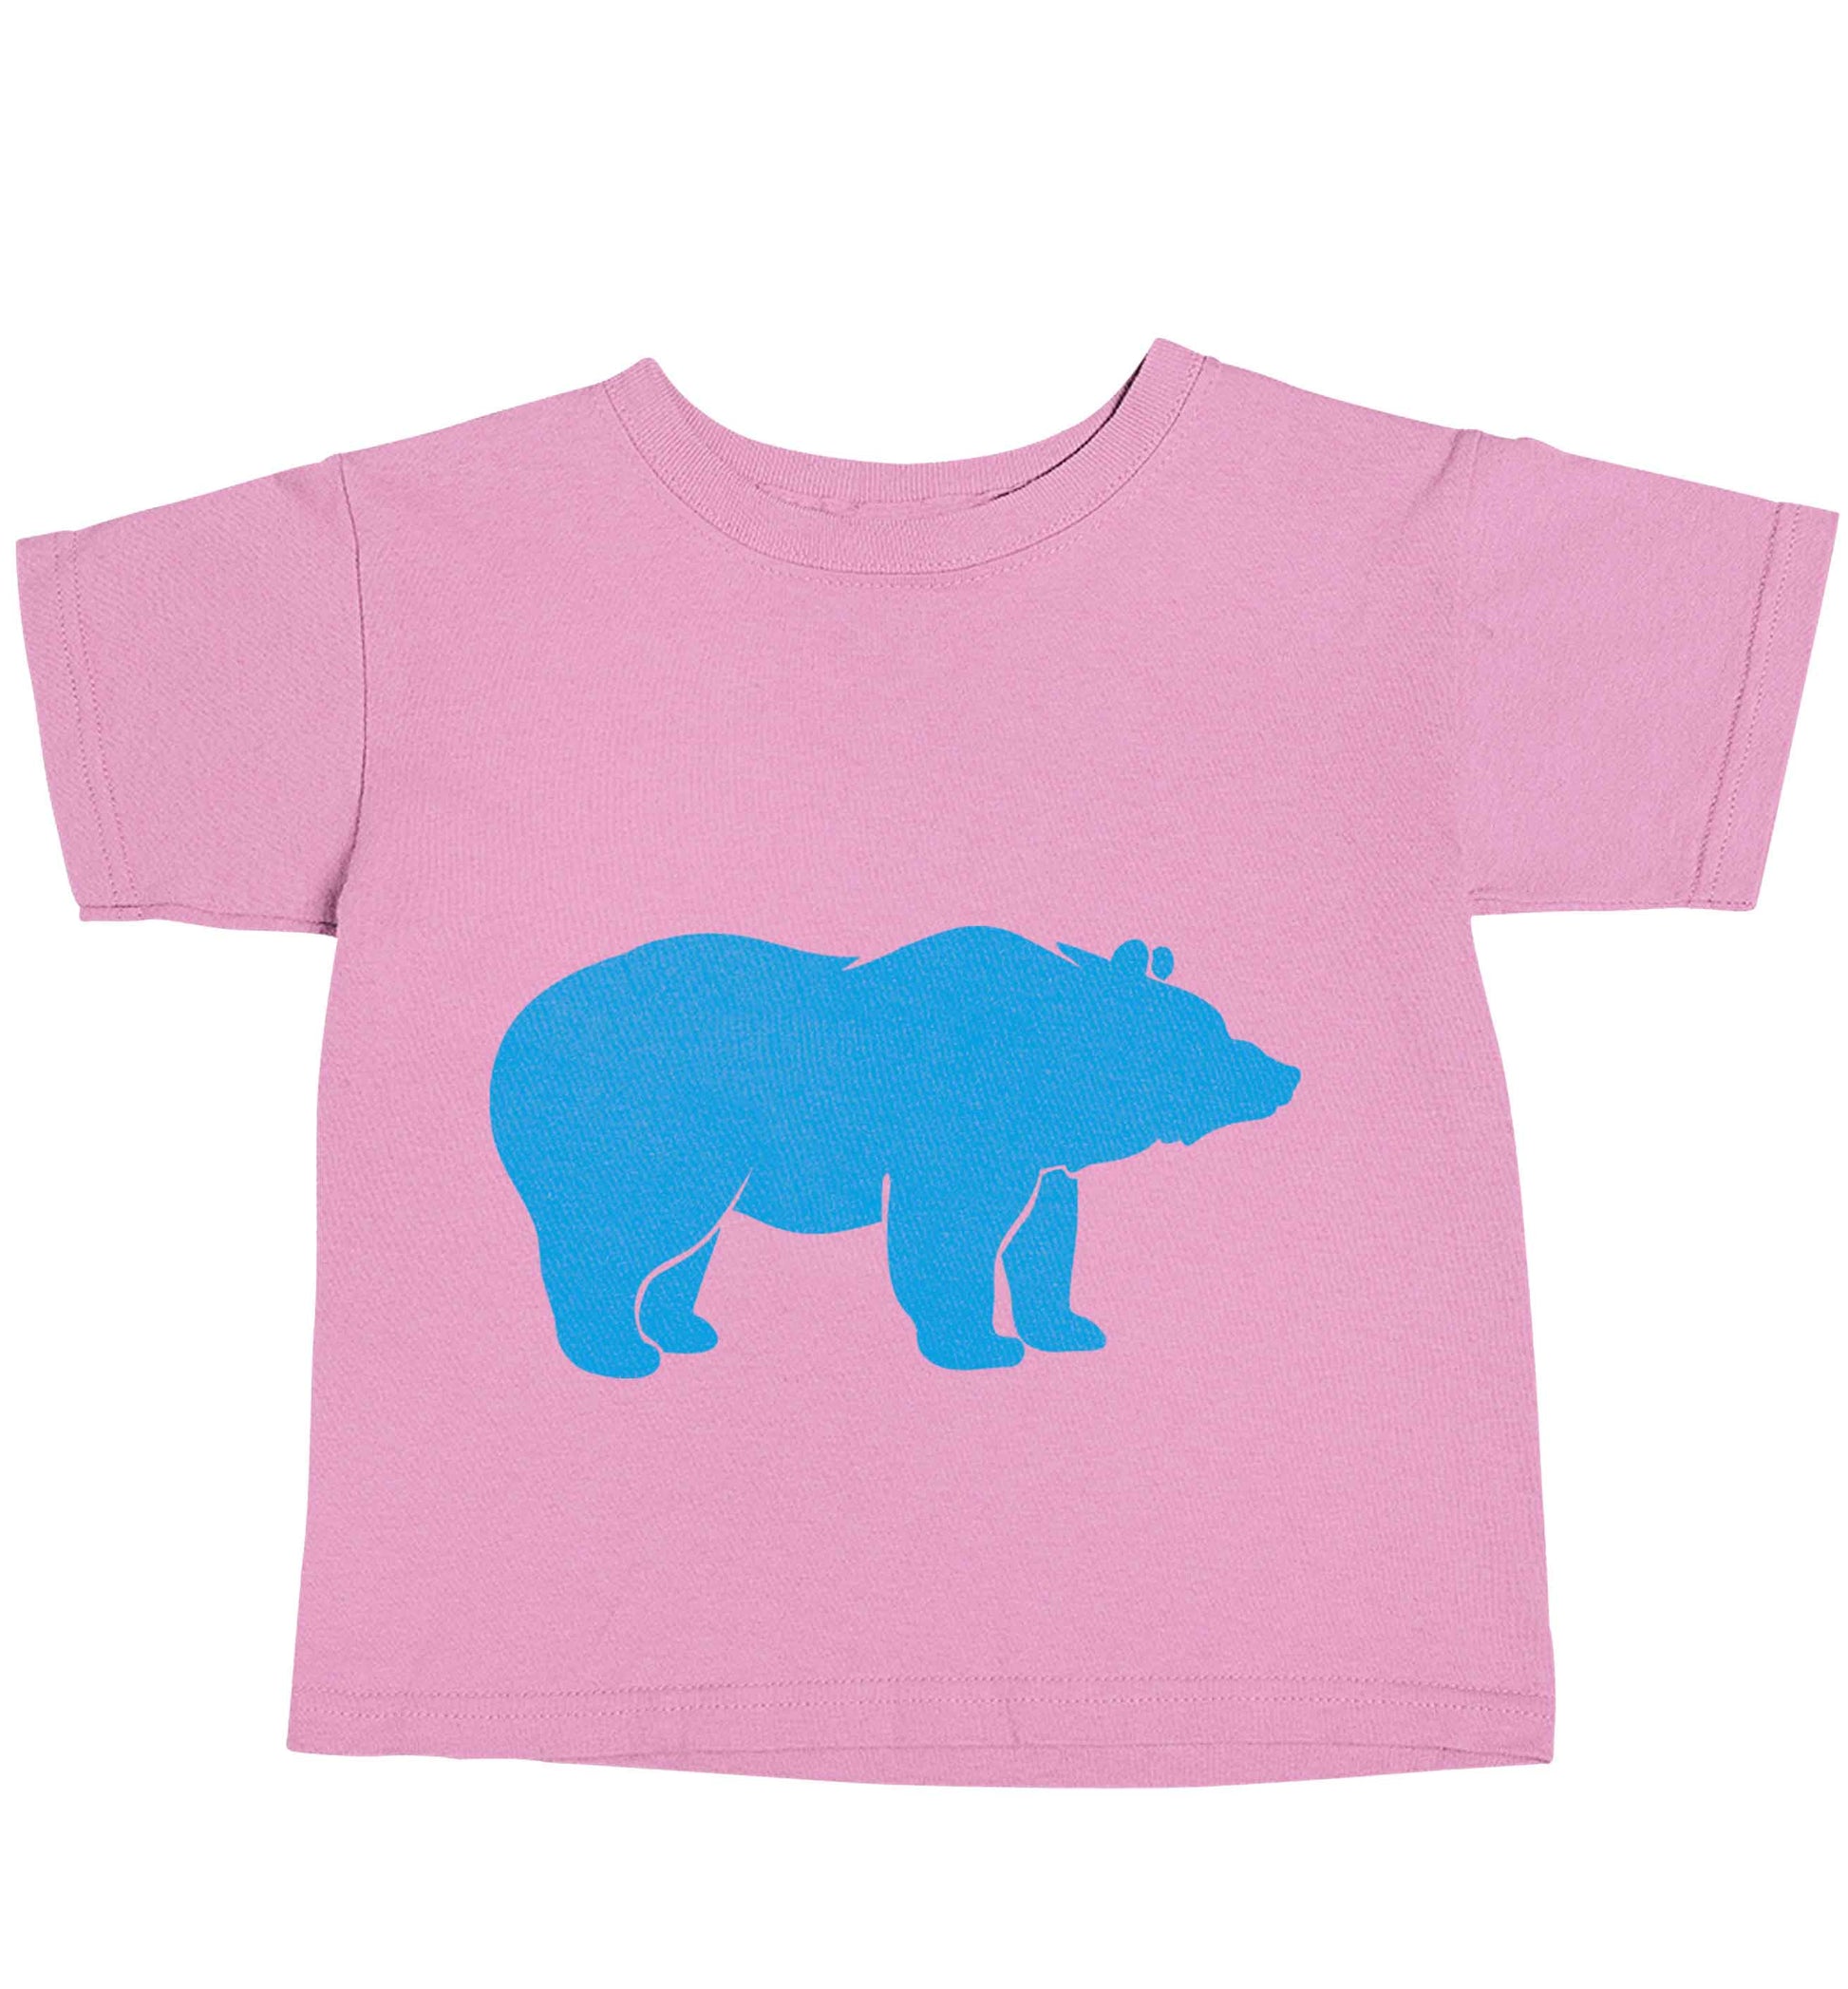 Blue bear light pink baby toddler Tshirt 2 Years